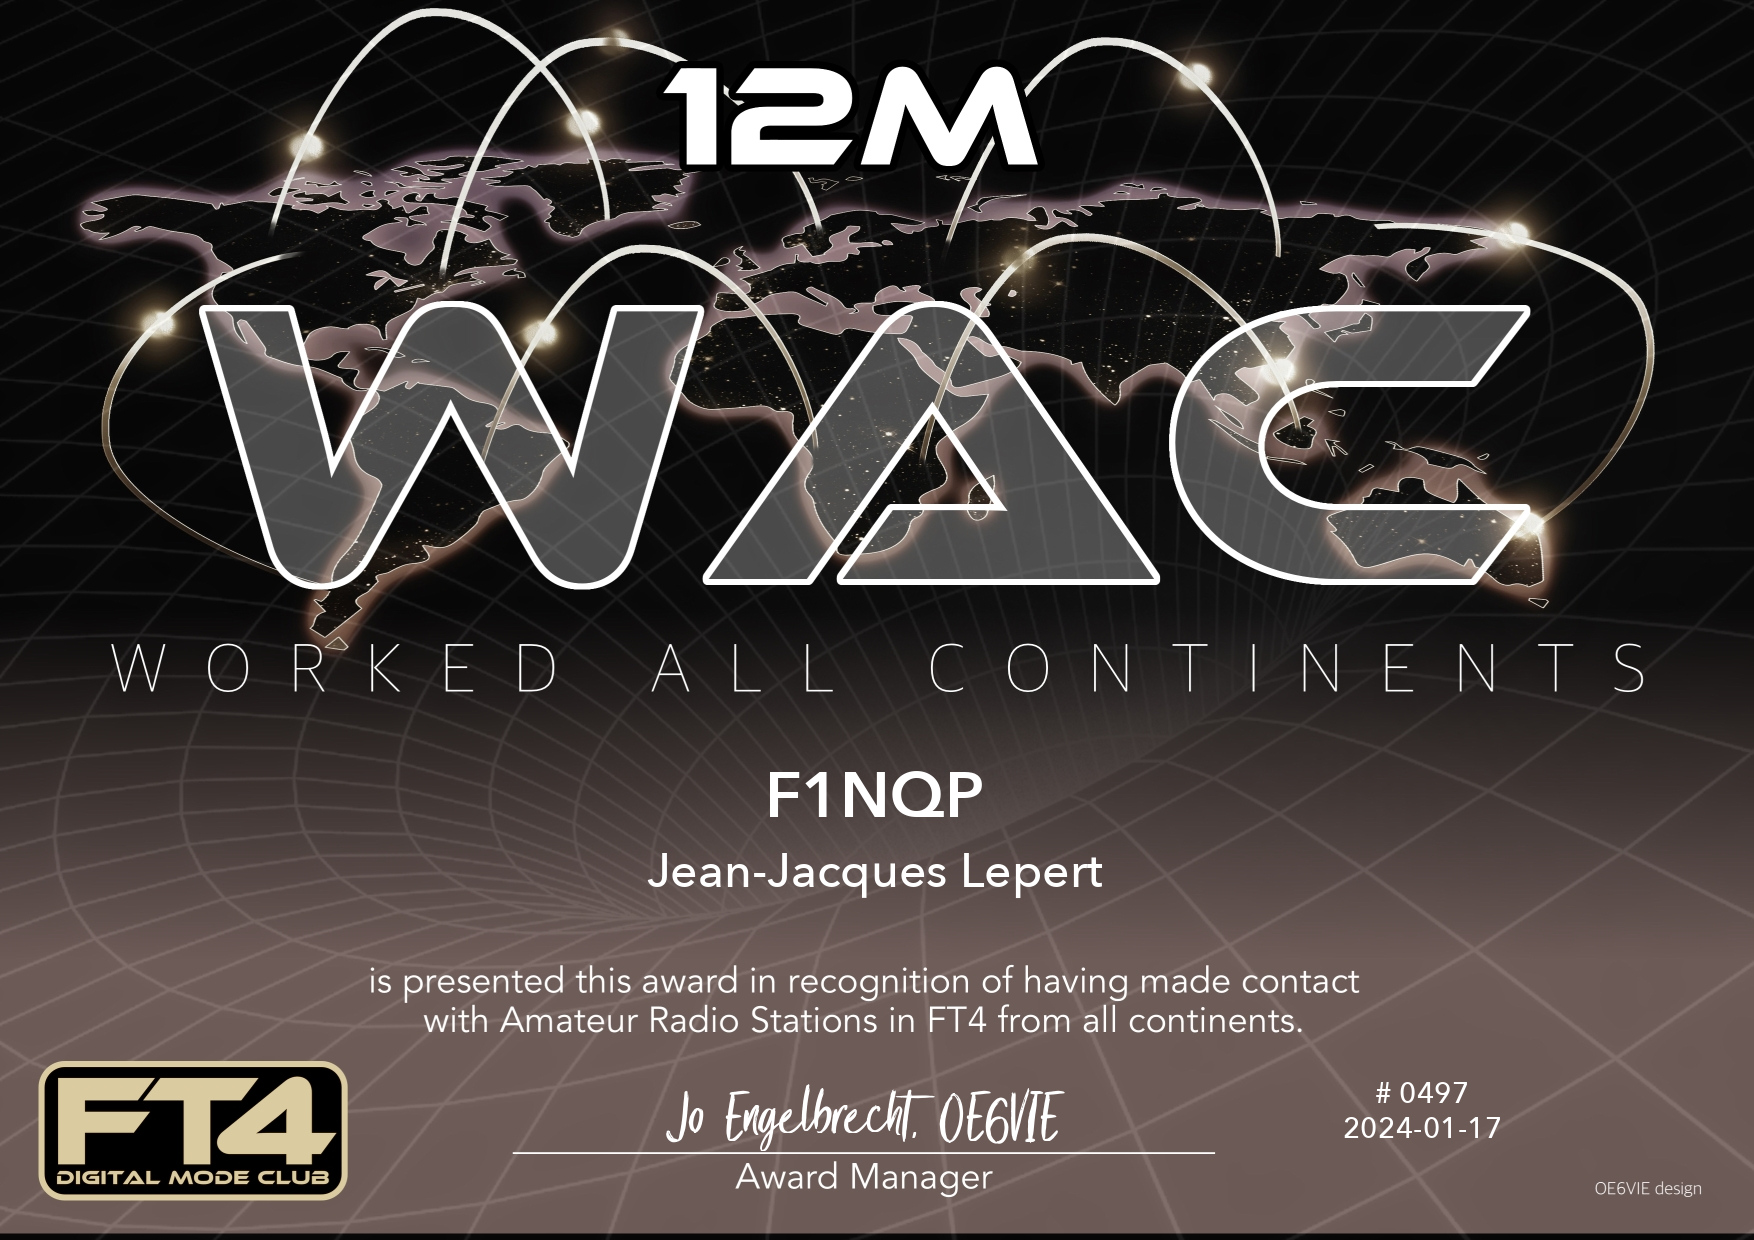 F1NQP-WAC-12M_FT4DMC.jpg